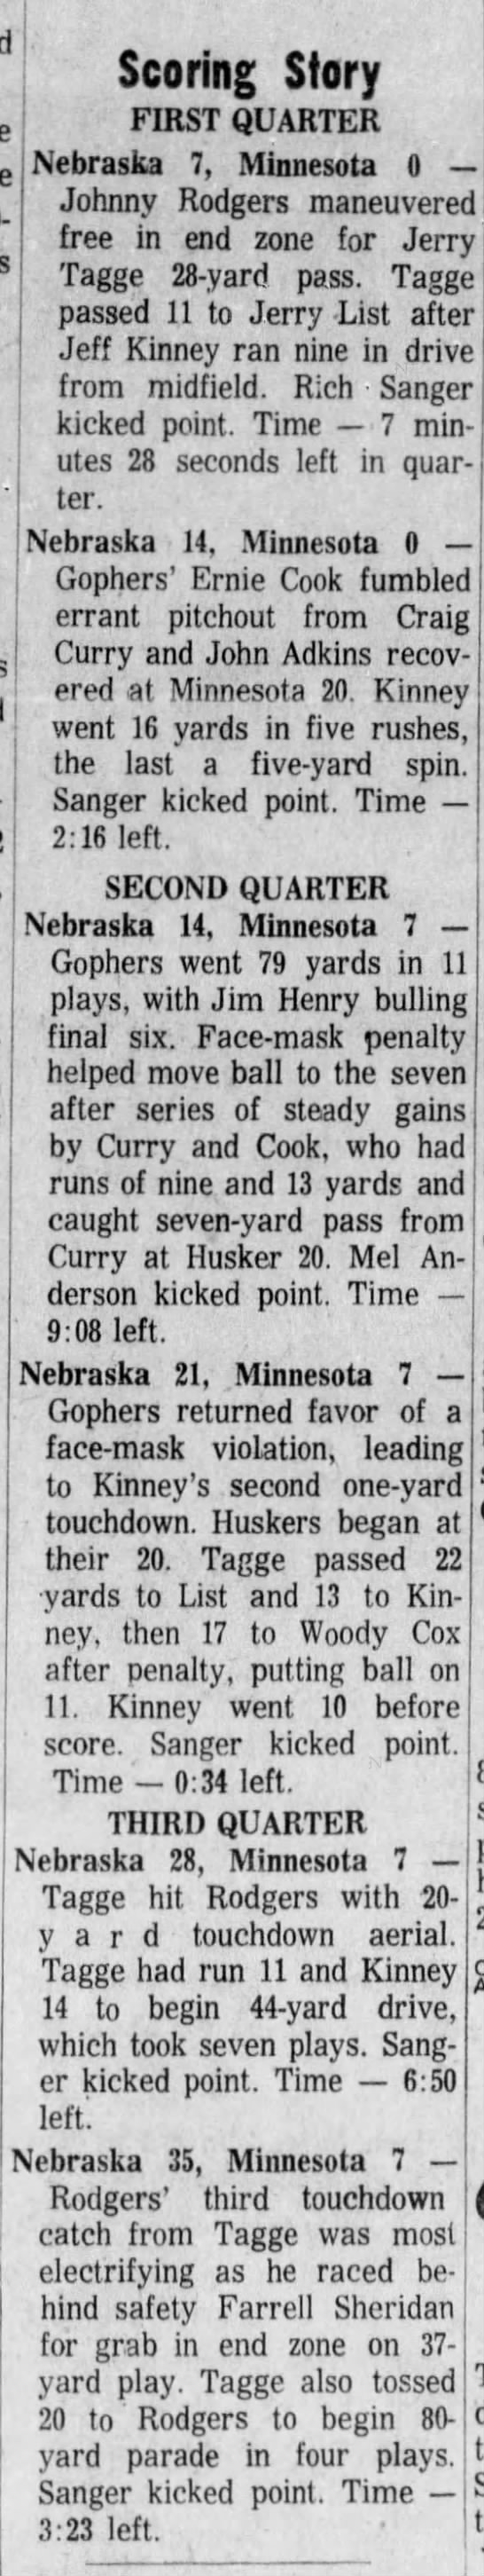 1971 Nebraska-Minnesota scoring summary - 